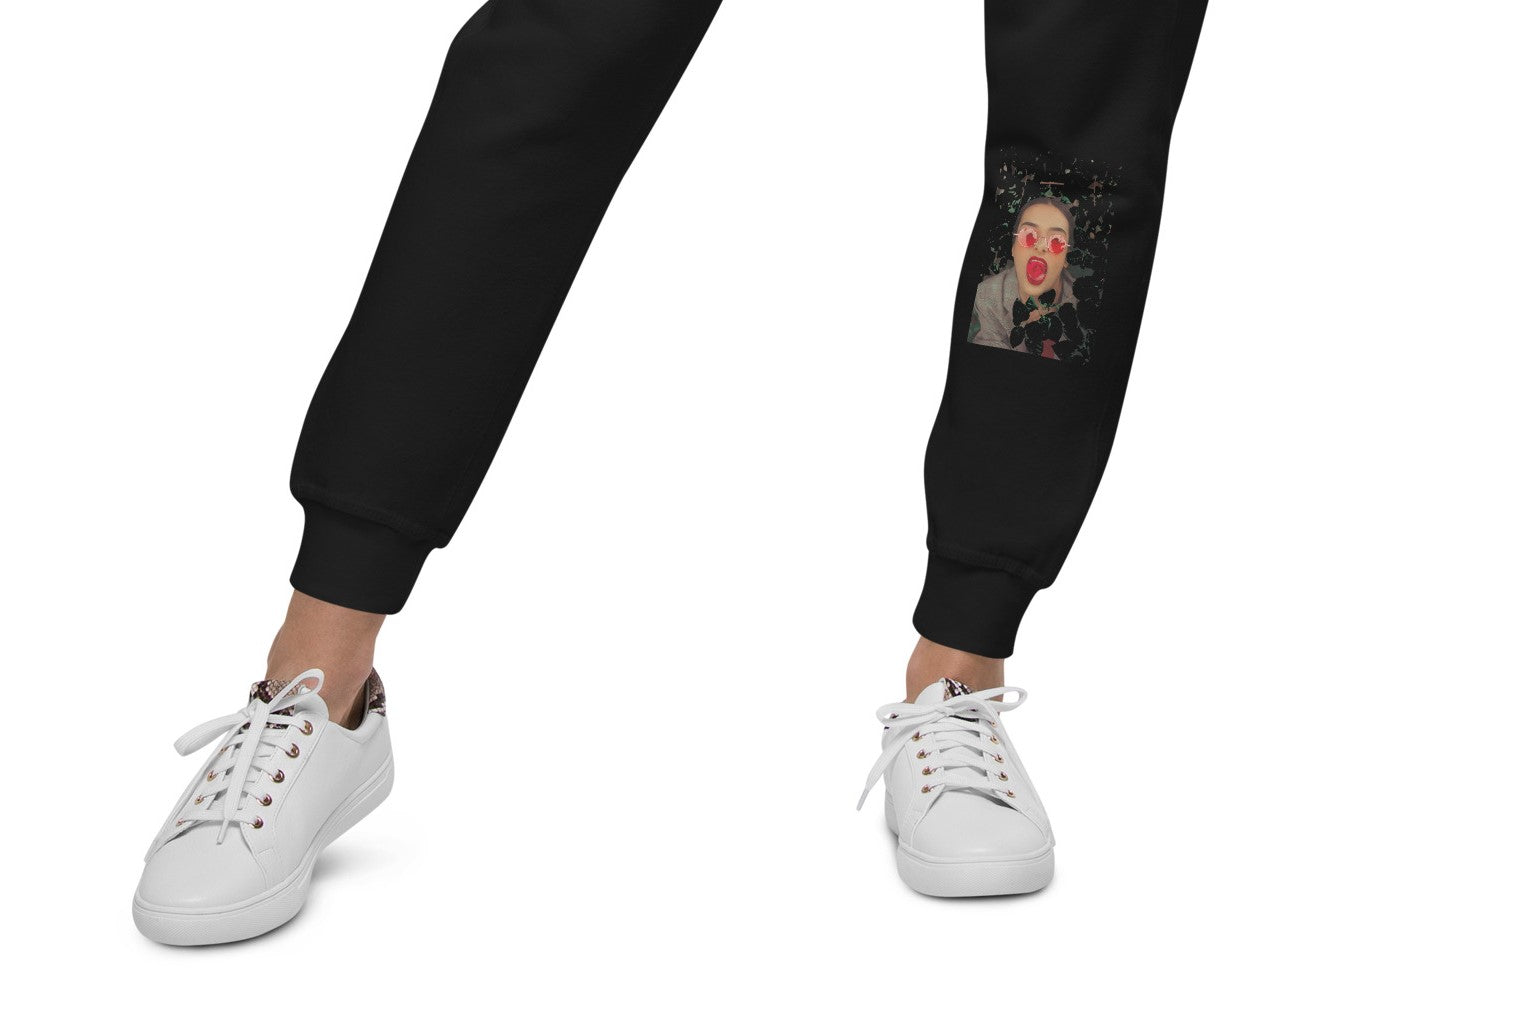 Black fleece sweatpants | joggers for woman | ONLYZ3AL